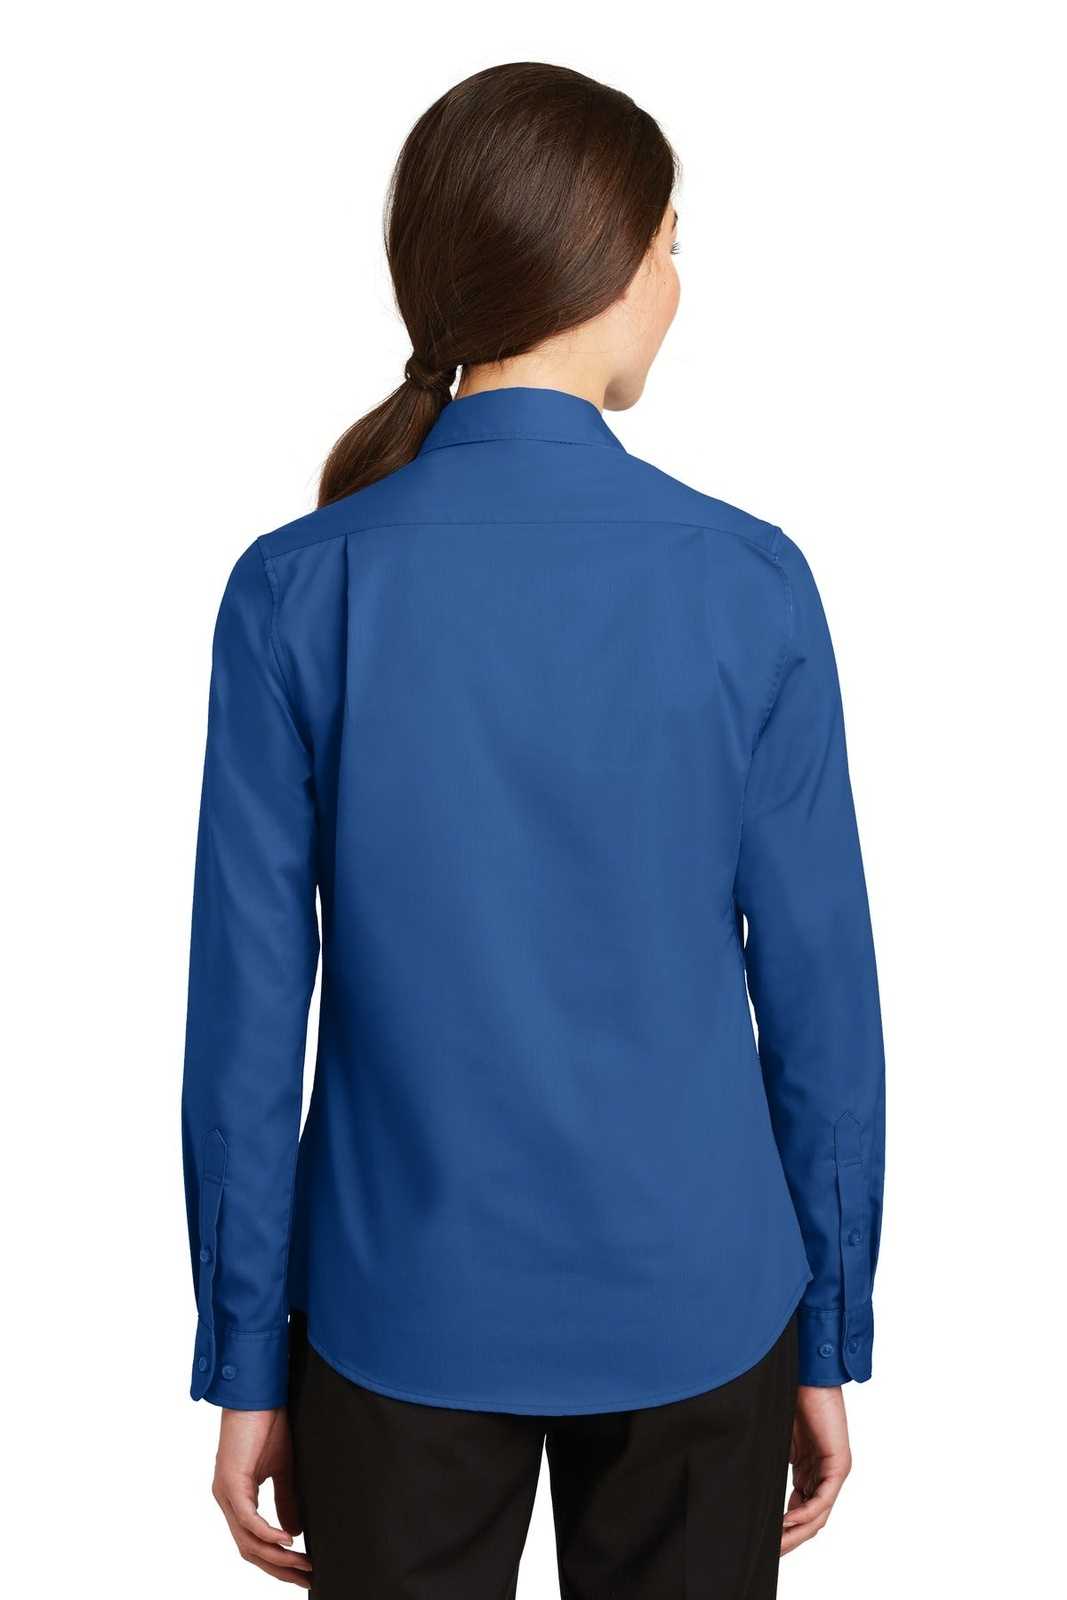 Port Authority L663 Ladies Superpro Twill Shirt - True Blue - HIT a Double - 2